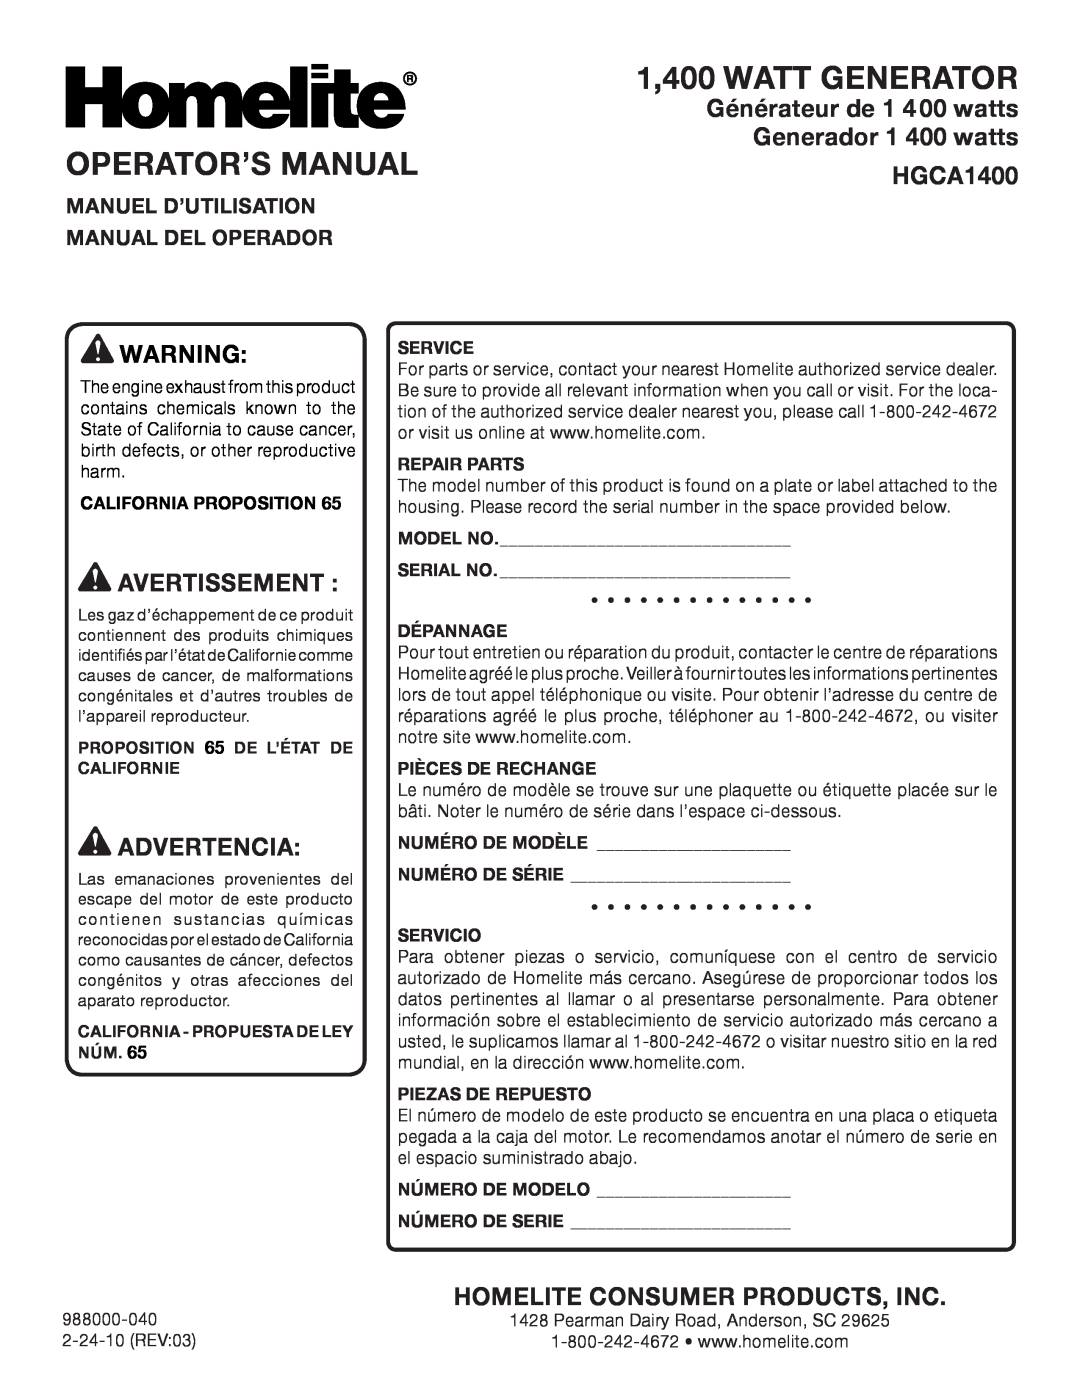 Homelite HGCA1400 Operator’S Manual, 1,400 WATT GENERATOR, Manuel D’Utilisation, Manual Del Operador, Service 